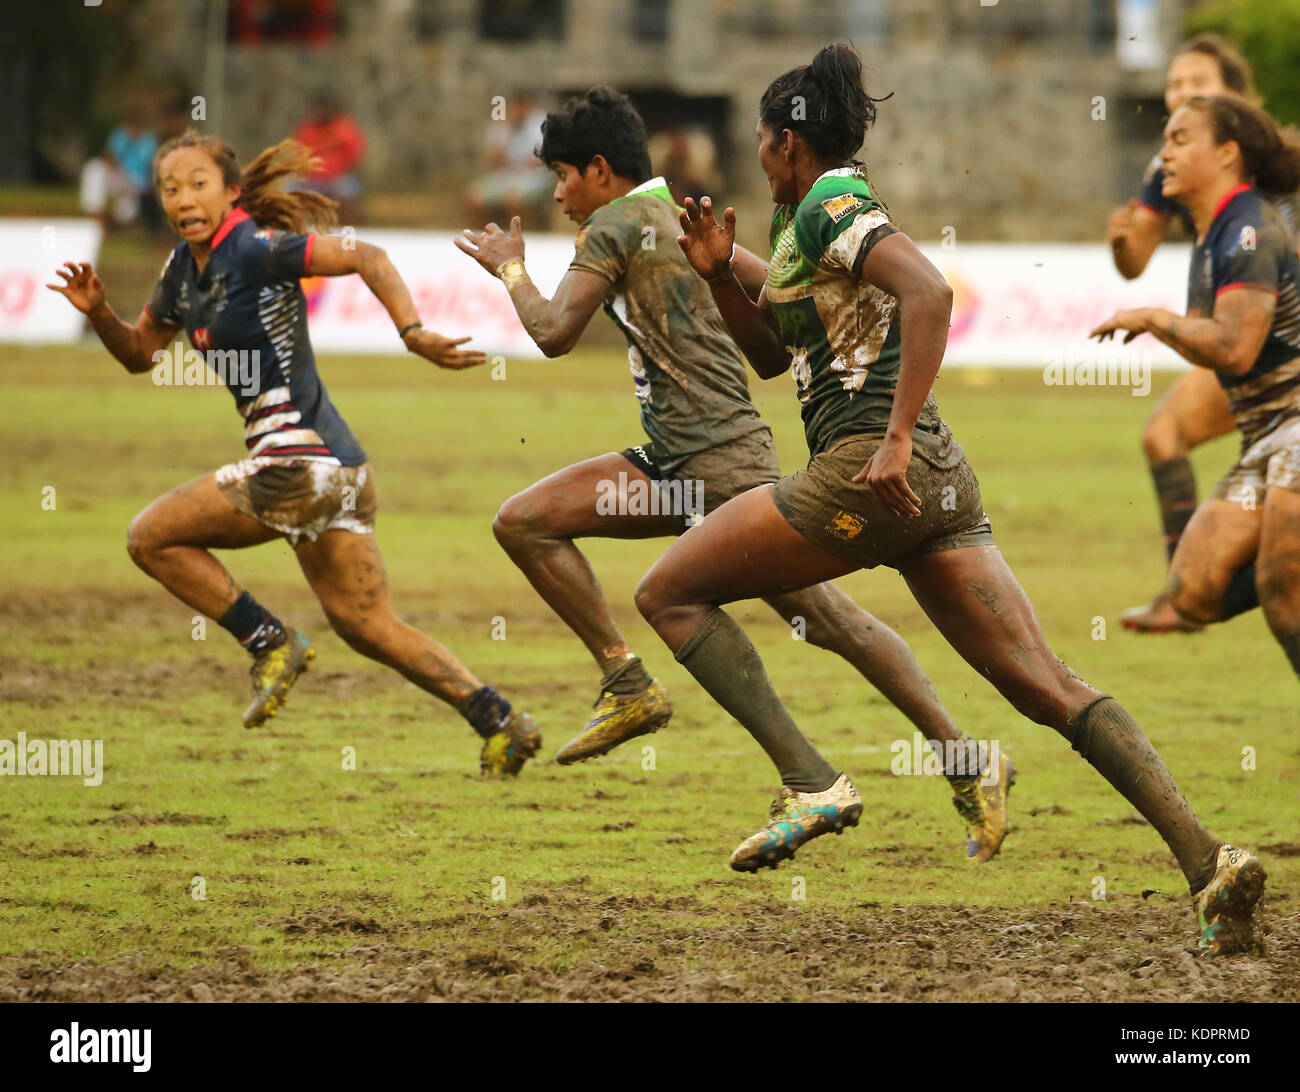 Colombo, Sri Lanka. 15 oct, 2017. L'Asie rugby à 7 à 2017 race course ground le 15 octobre 2017 à Colombo, Sri lanka : crédit vimukthi embuldeniya/Alamy live news Banque D'Images